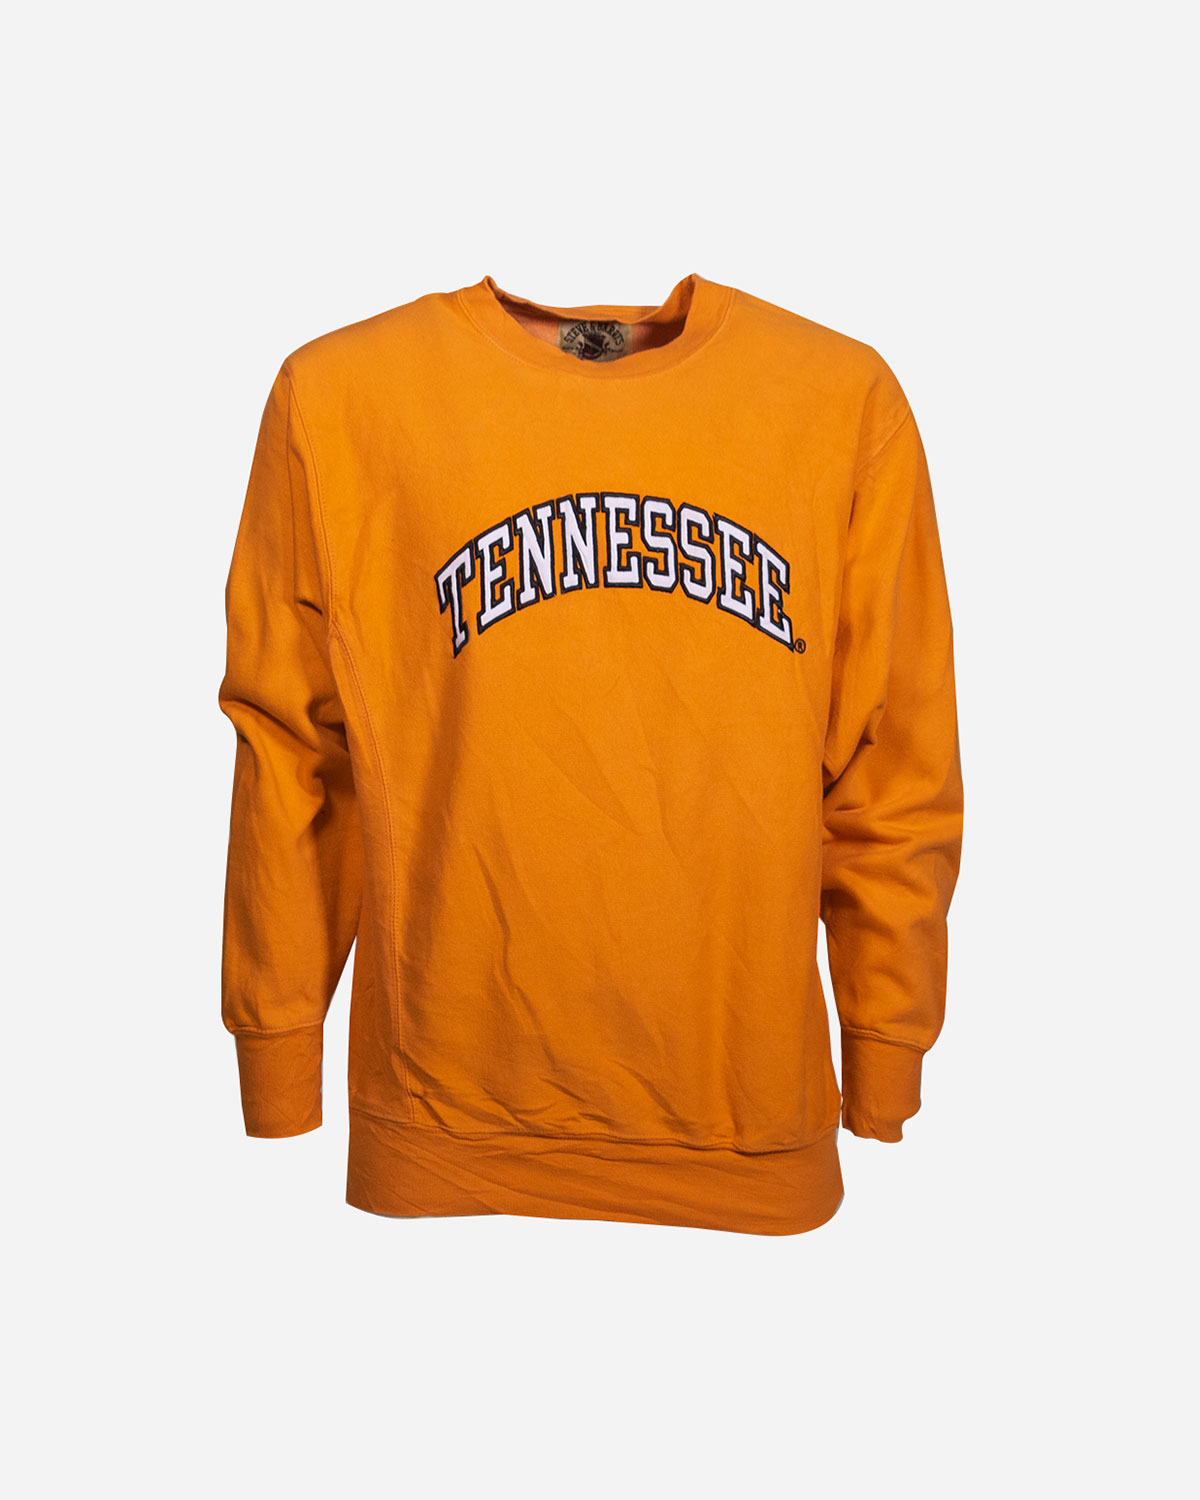 Men’s sweatshirts USA 80s prints: 4 pieces